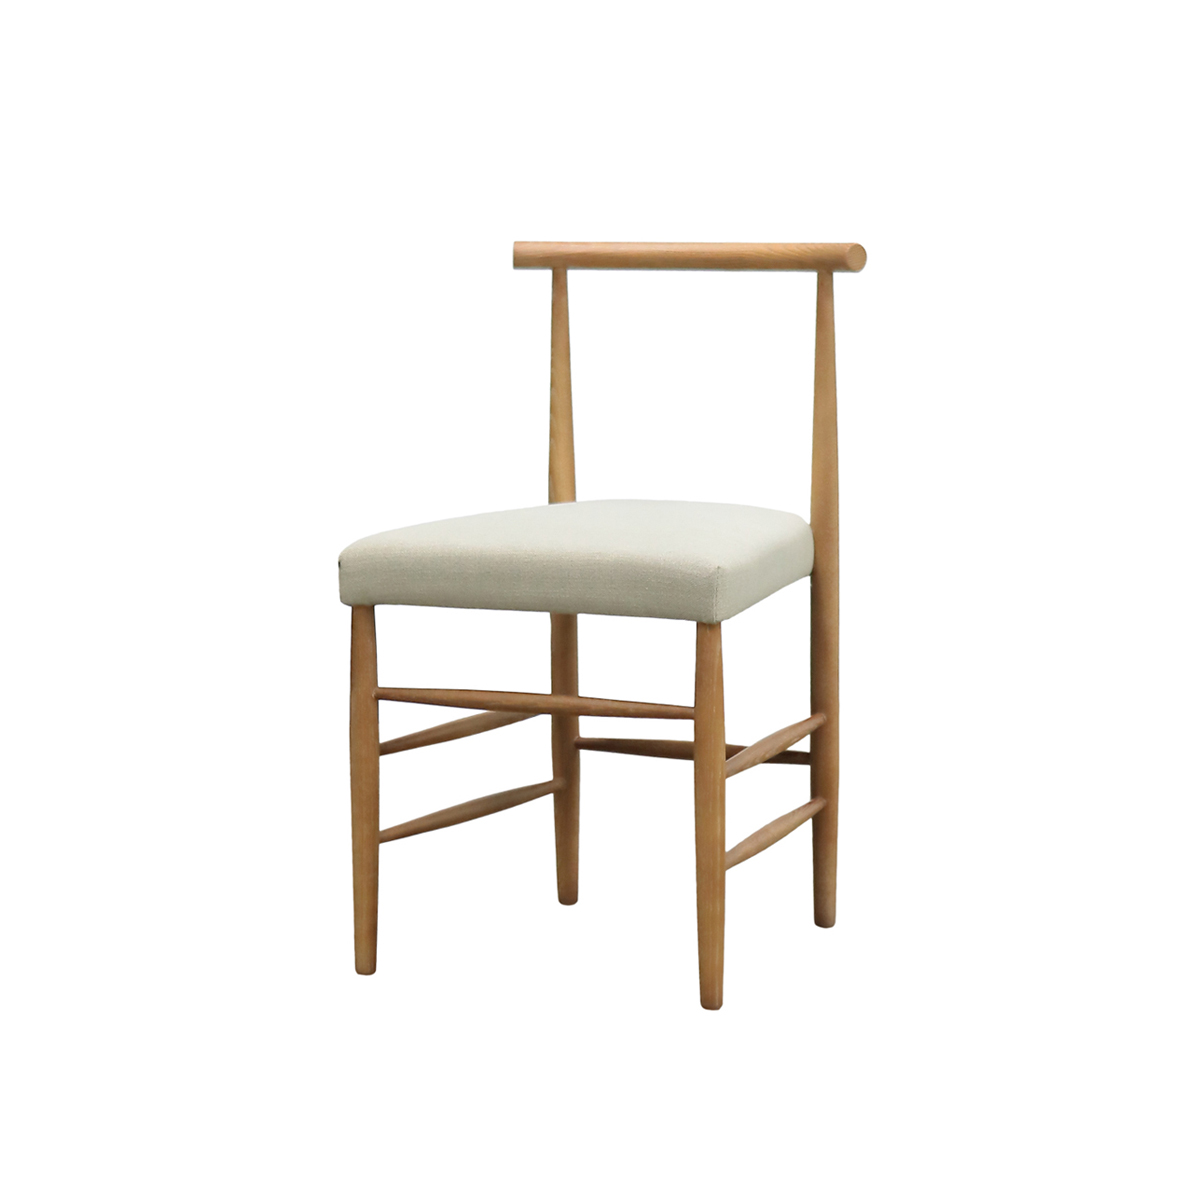 Zacc collection by SEDEC Cane Plus Dining Chair 케인 플러스 식탁 의자 - A265 (내추럴)